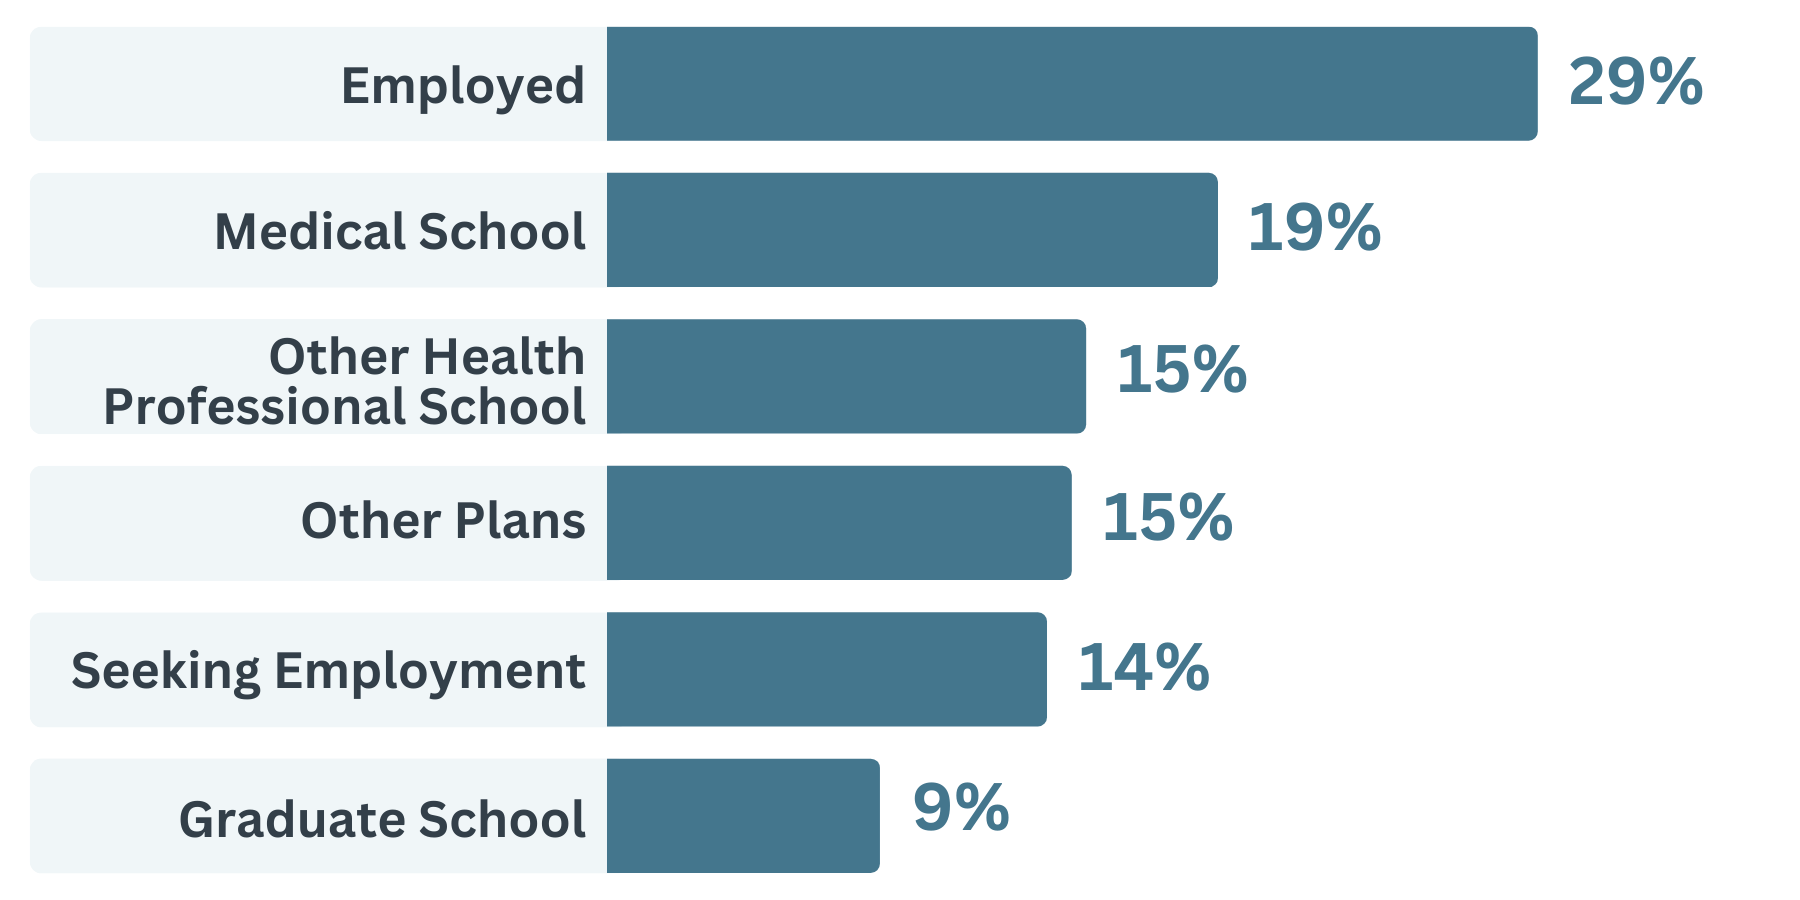 biology data: employed 29%, medical school 19%, other health professional school 15%, other plans 15%, seeking employment 14%, graduate school 9%